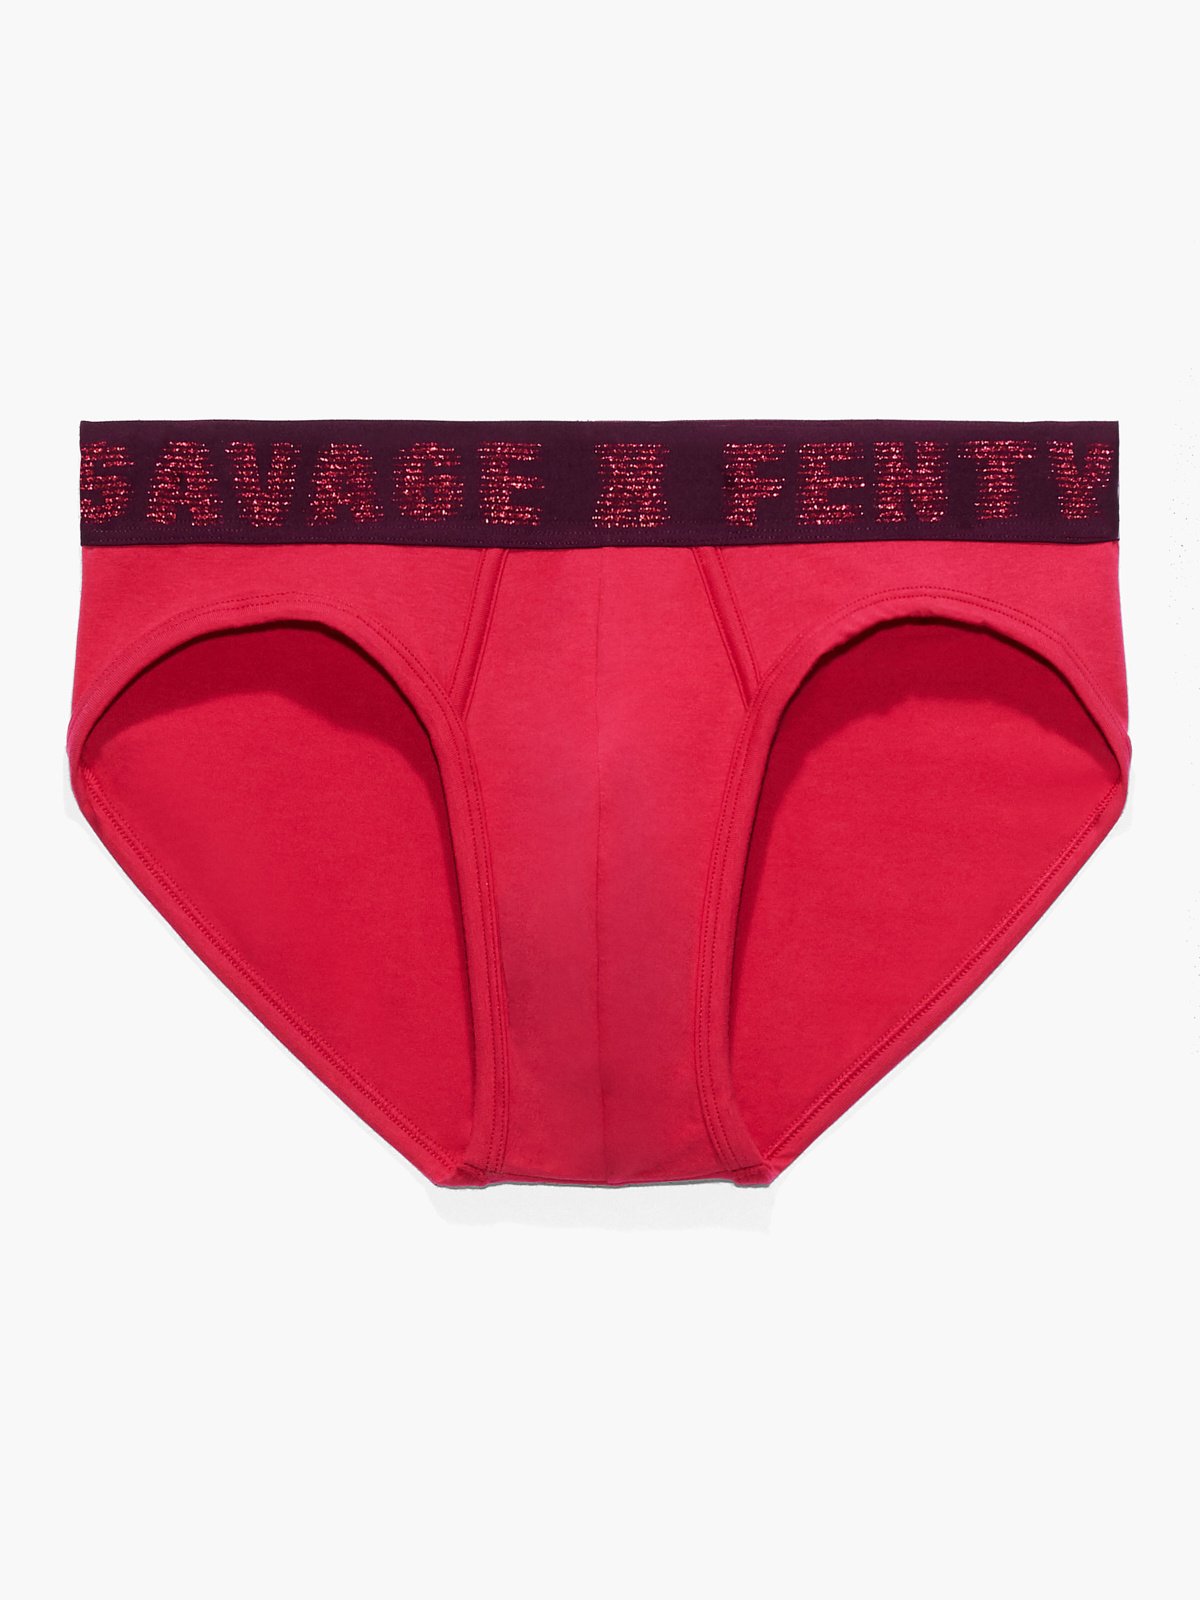 Savage x Fenty Savage x Boxer Brief Underwear (Panties)s Black/Red Size M | by Rihanna